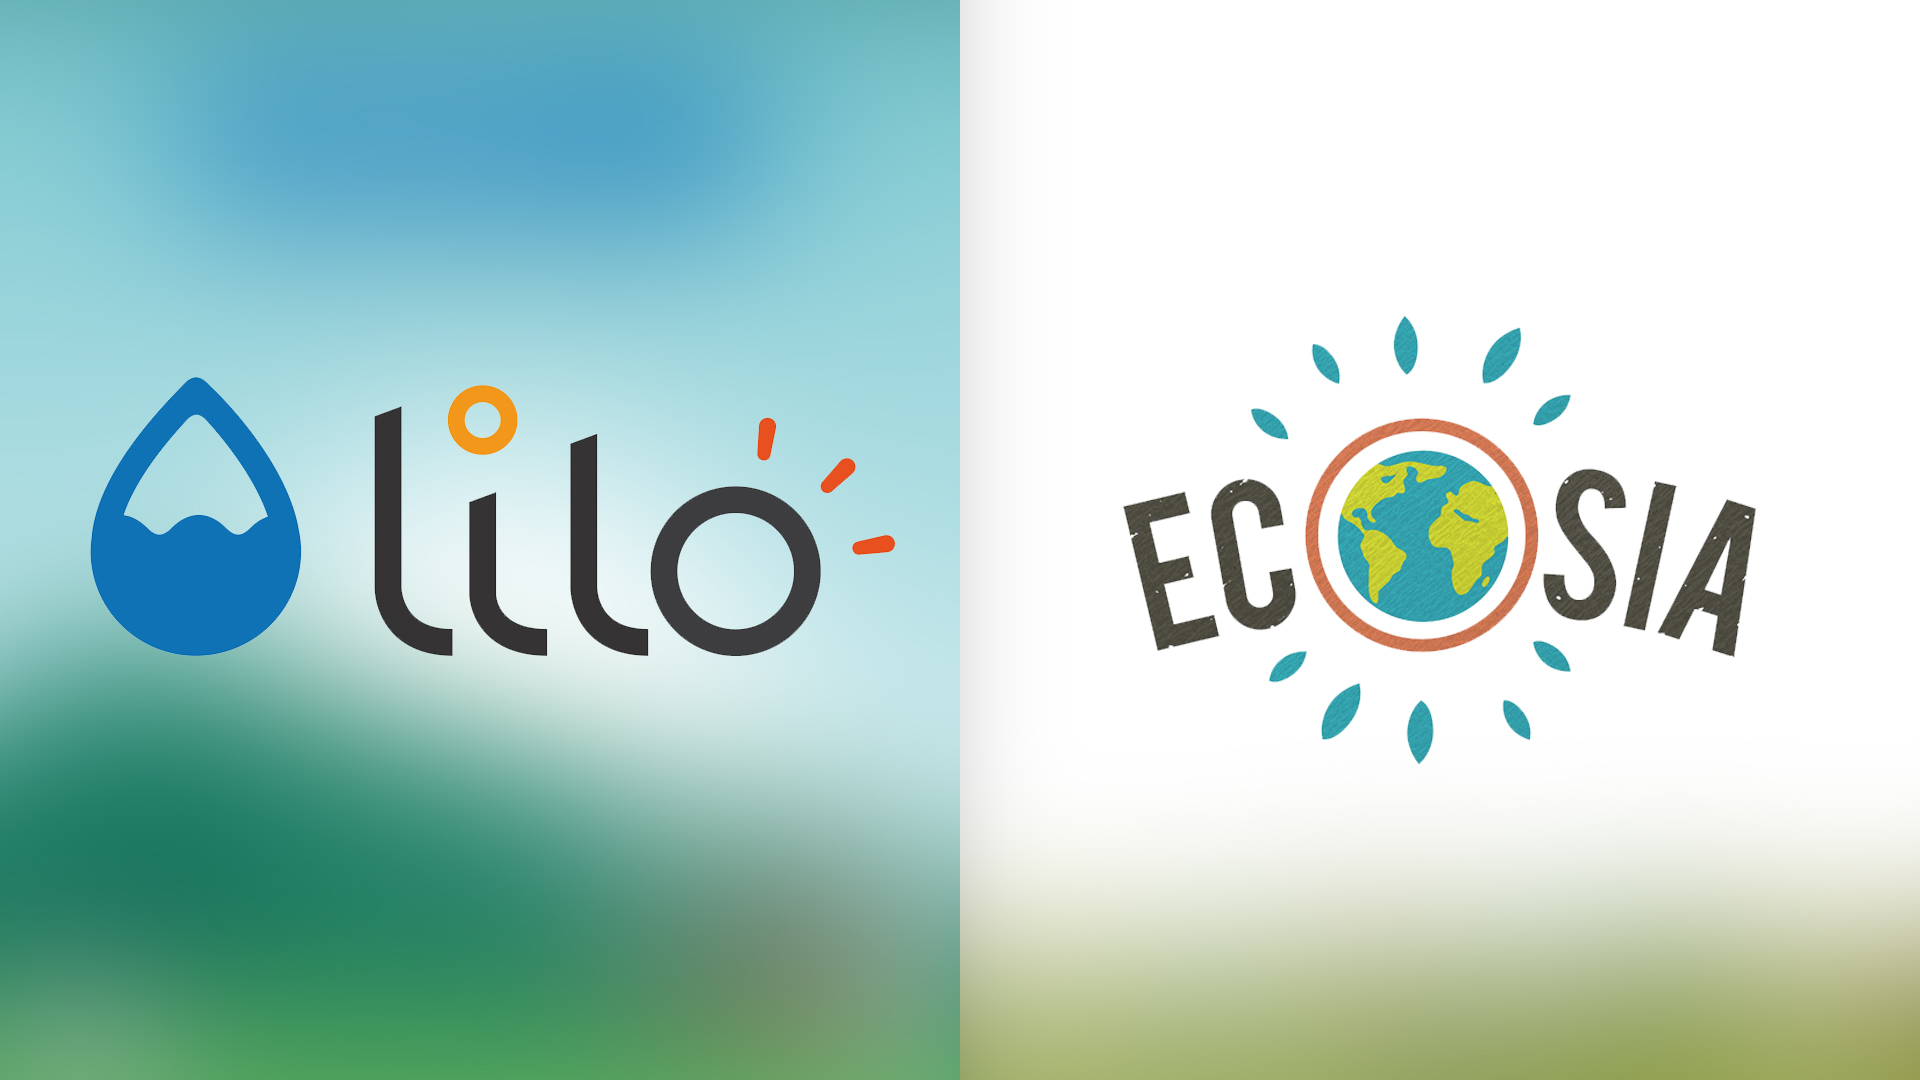 Ecosia ou Lilo : Lequel choisir ?